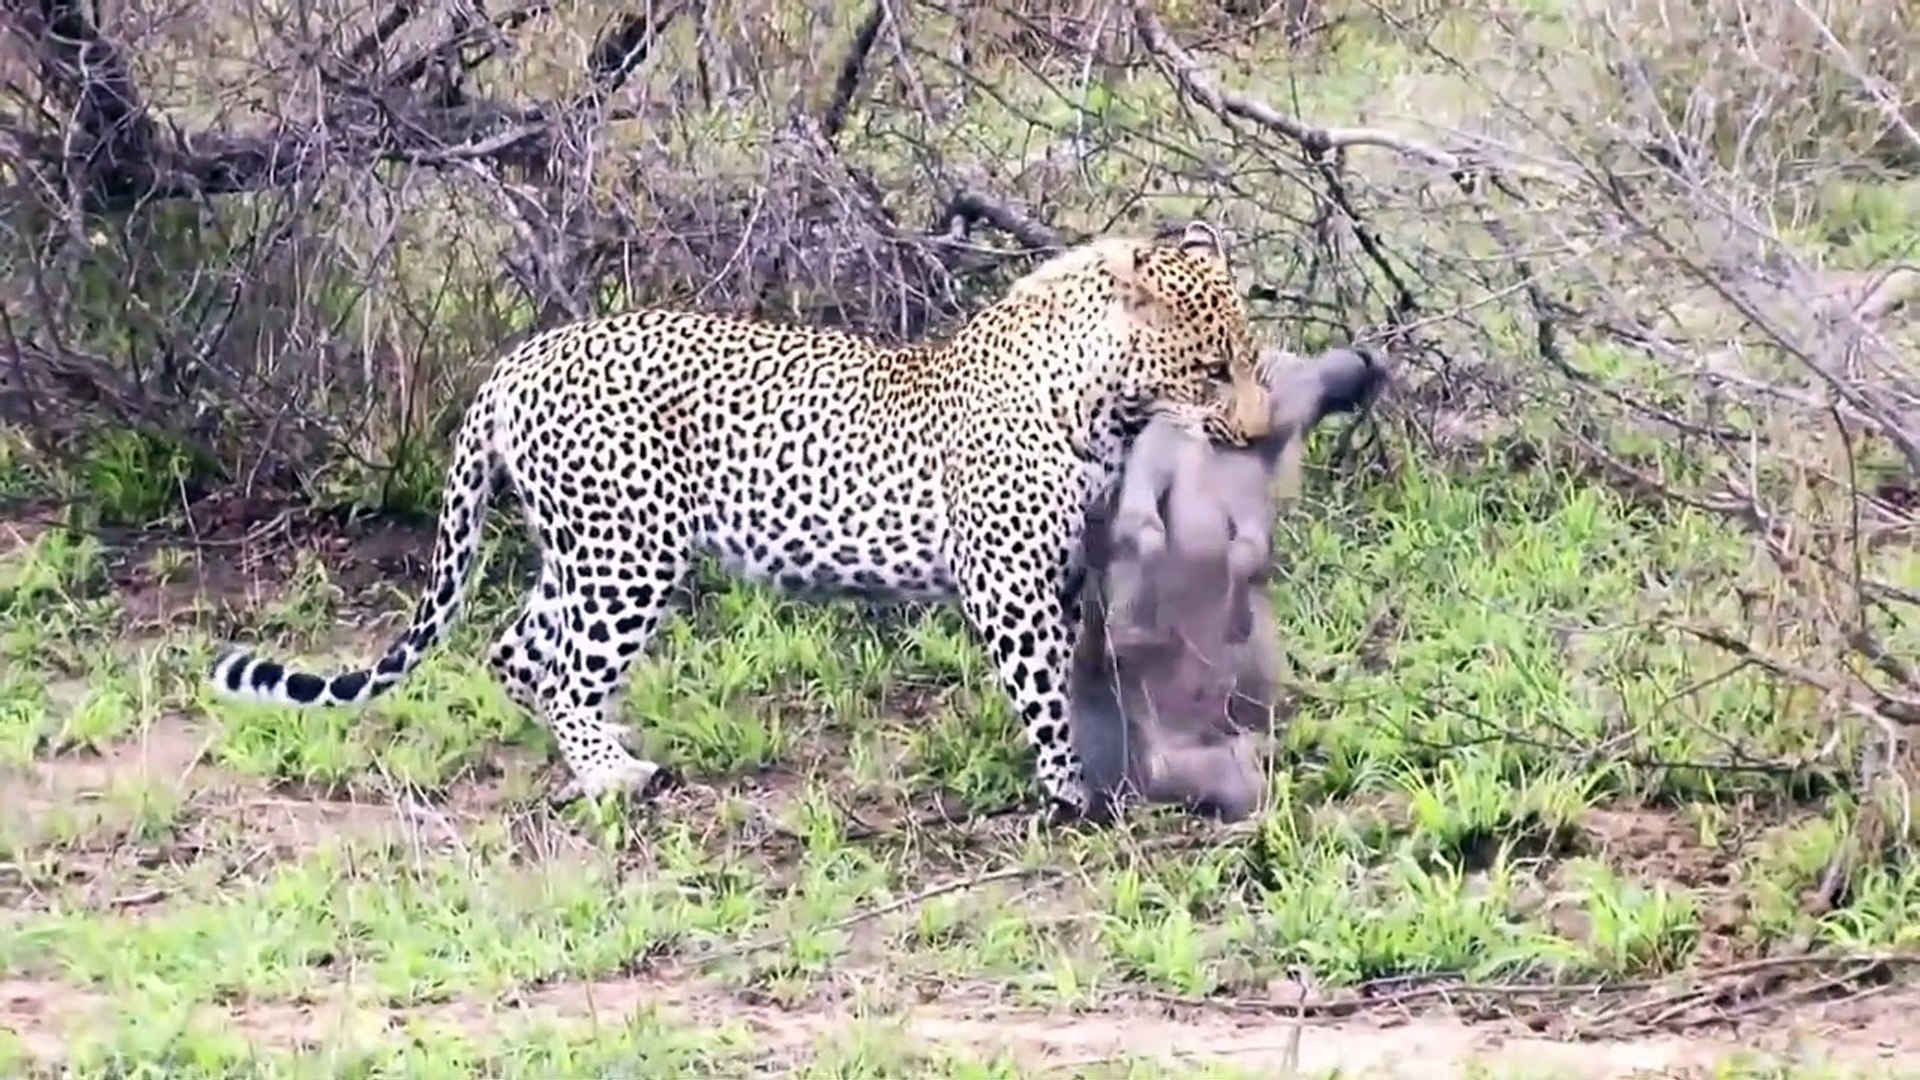 Cheetah vs WarThog! Cheetah attack the running Warthog! Cheetah rob Baby Warthog from Mother Warthog